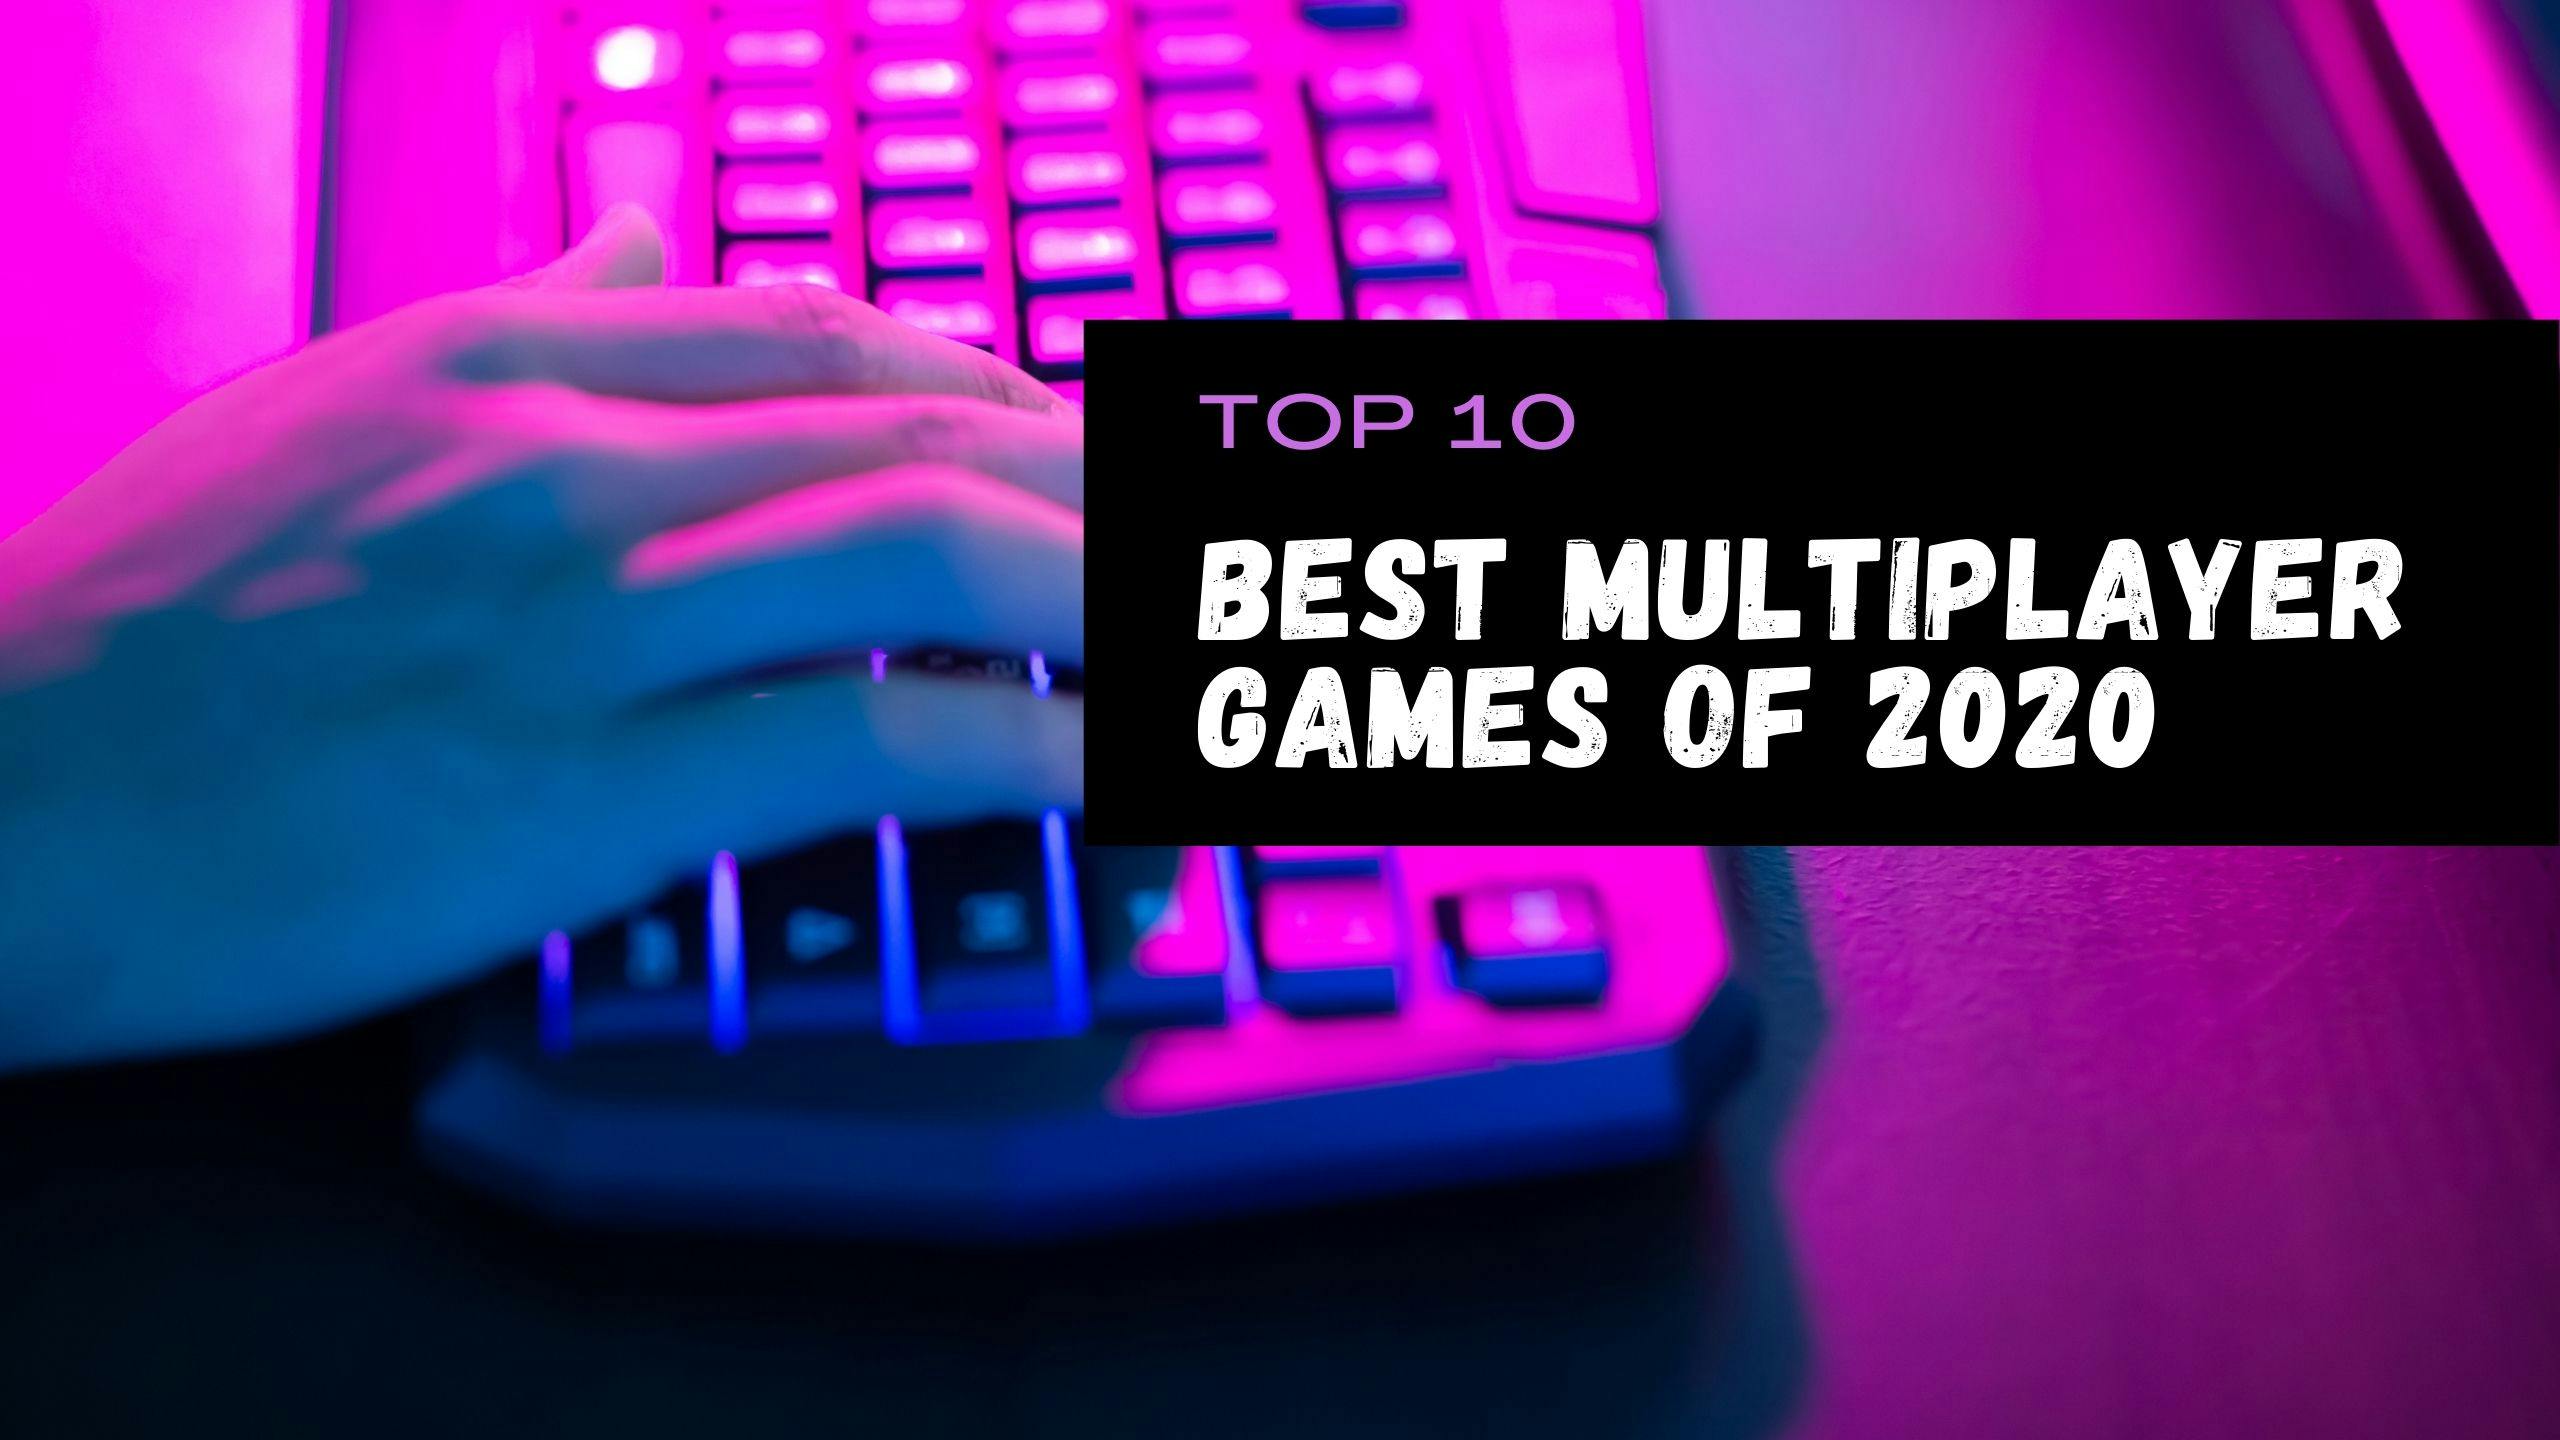 Top 10 Best Multiplayer Games of 2020